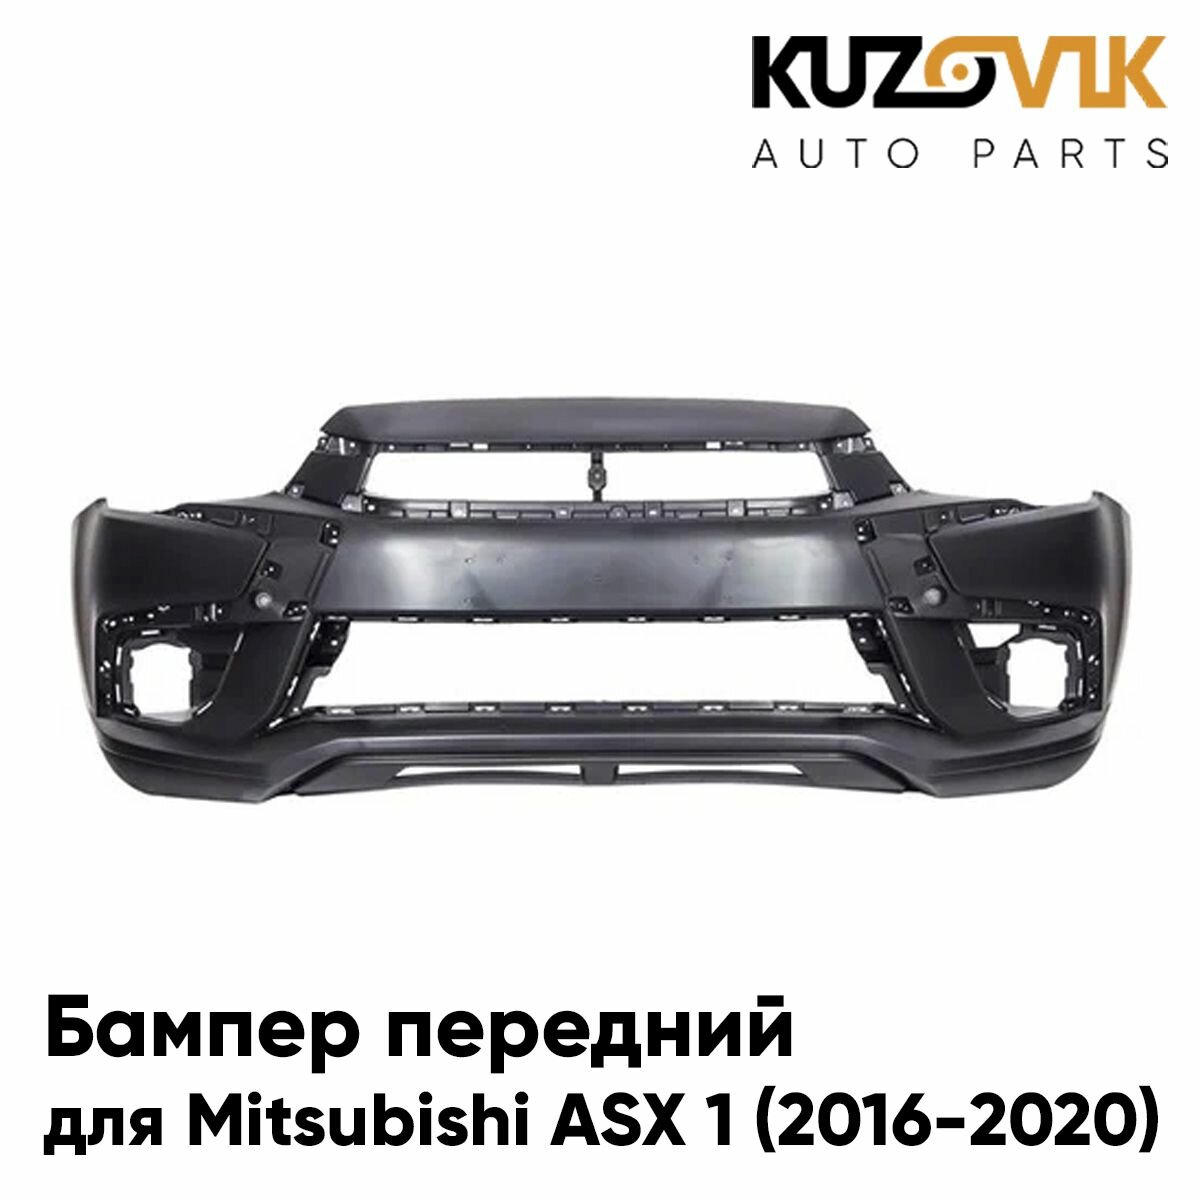 Бампер передний для Митсубиси Mitsubishi ASX 1 (2016-2020) рестайлинг 2